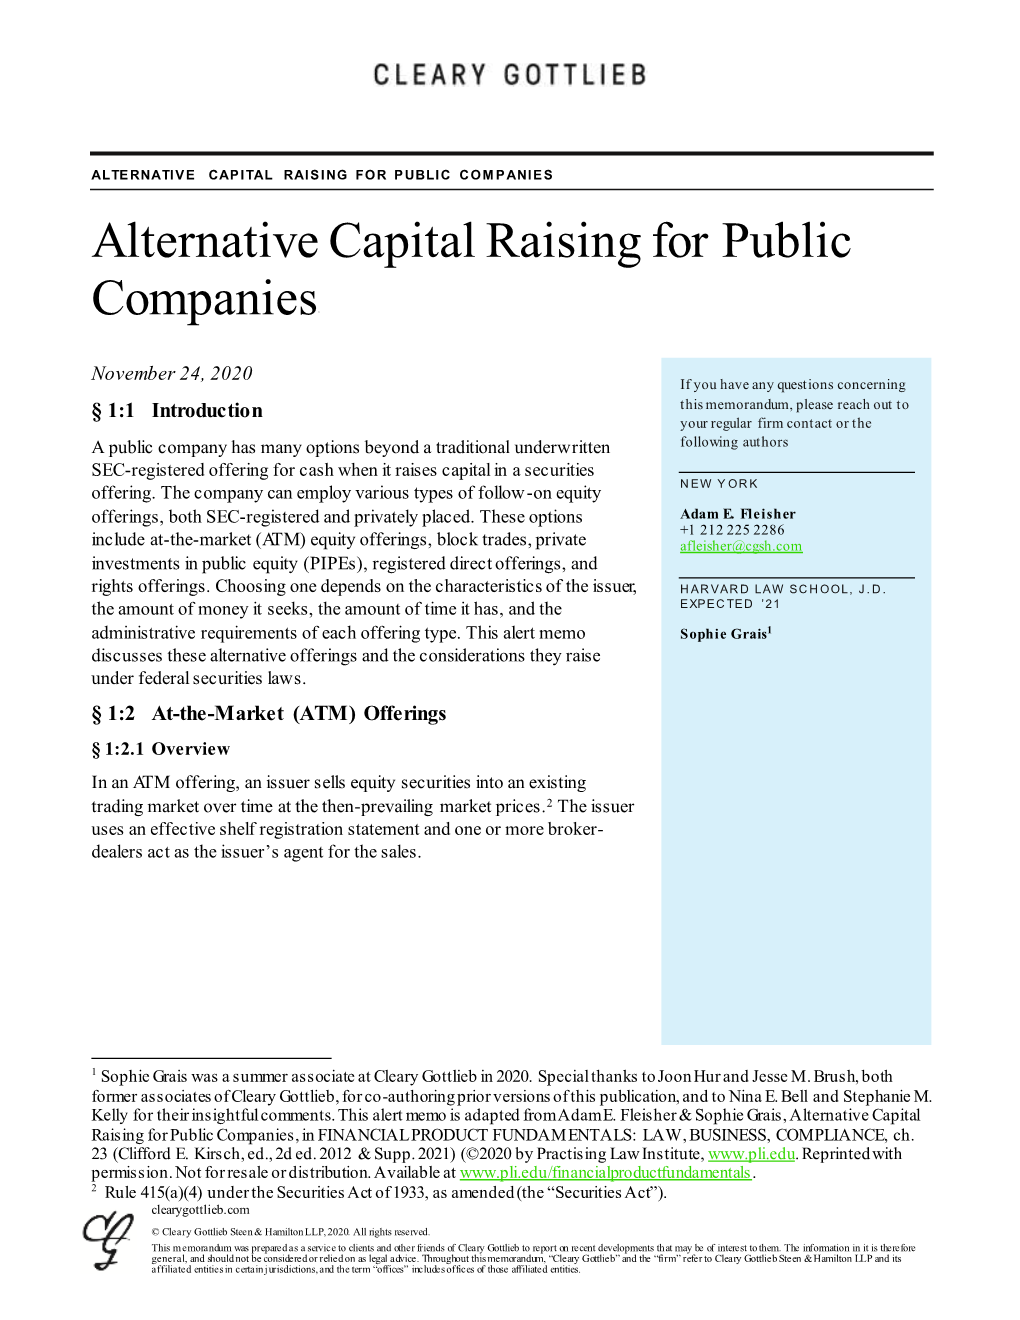 ALTERNATIVE CAPITAL RAISING for PUBLIC COMPANIES Alternative Capital Raising for Public